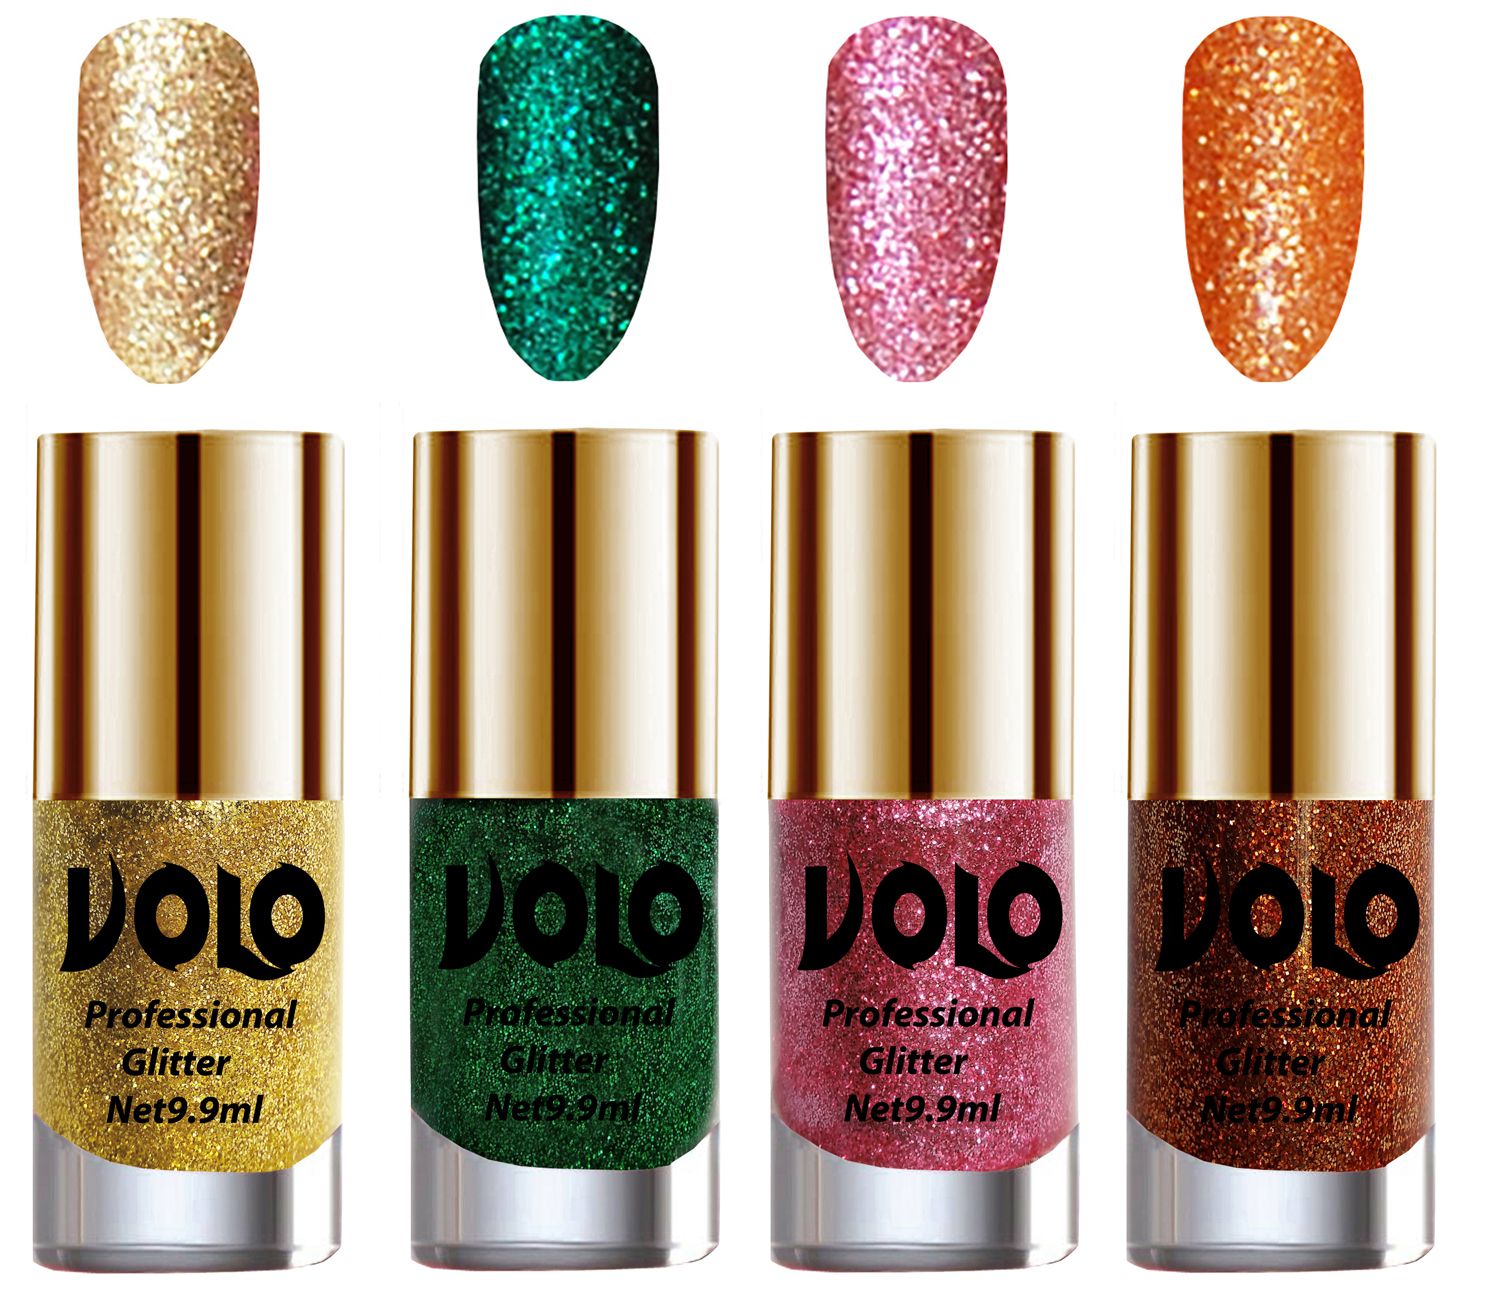     			VOLO Professionally Used Glitter Shine Nail Polish Gold,Green,Pink Orange Pack of 4 39 mL